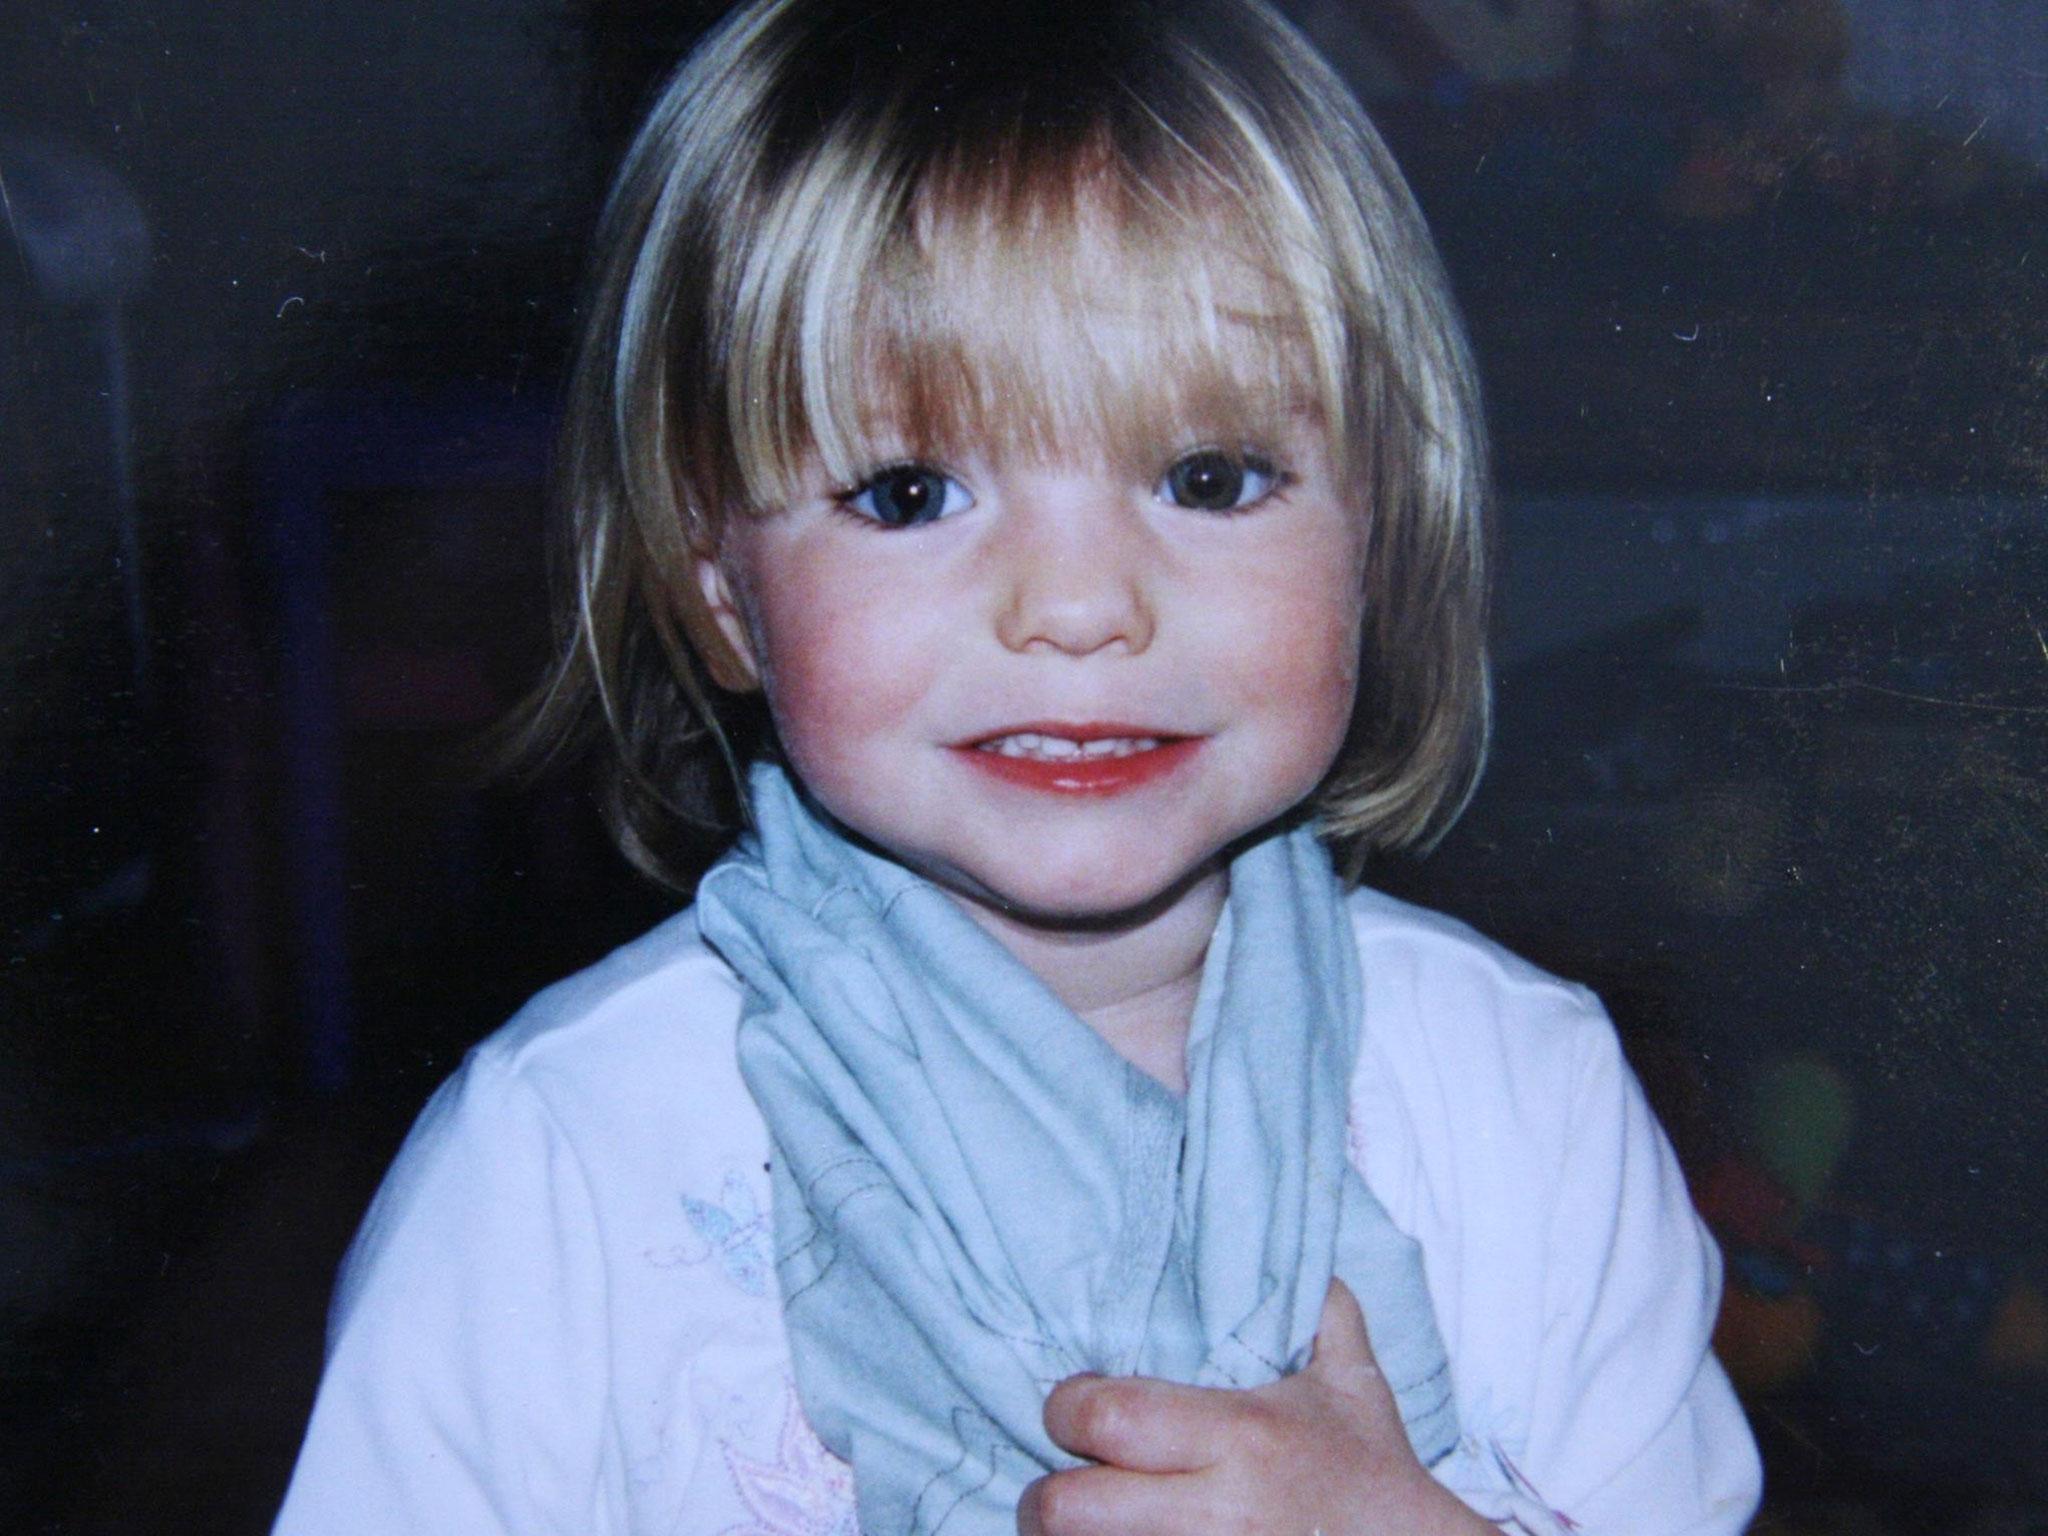 Madeleine McCann disappeared in 2007